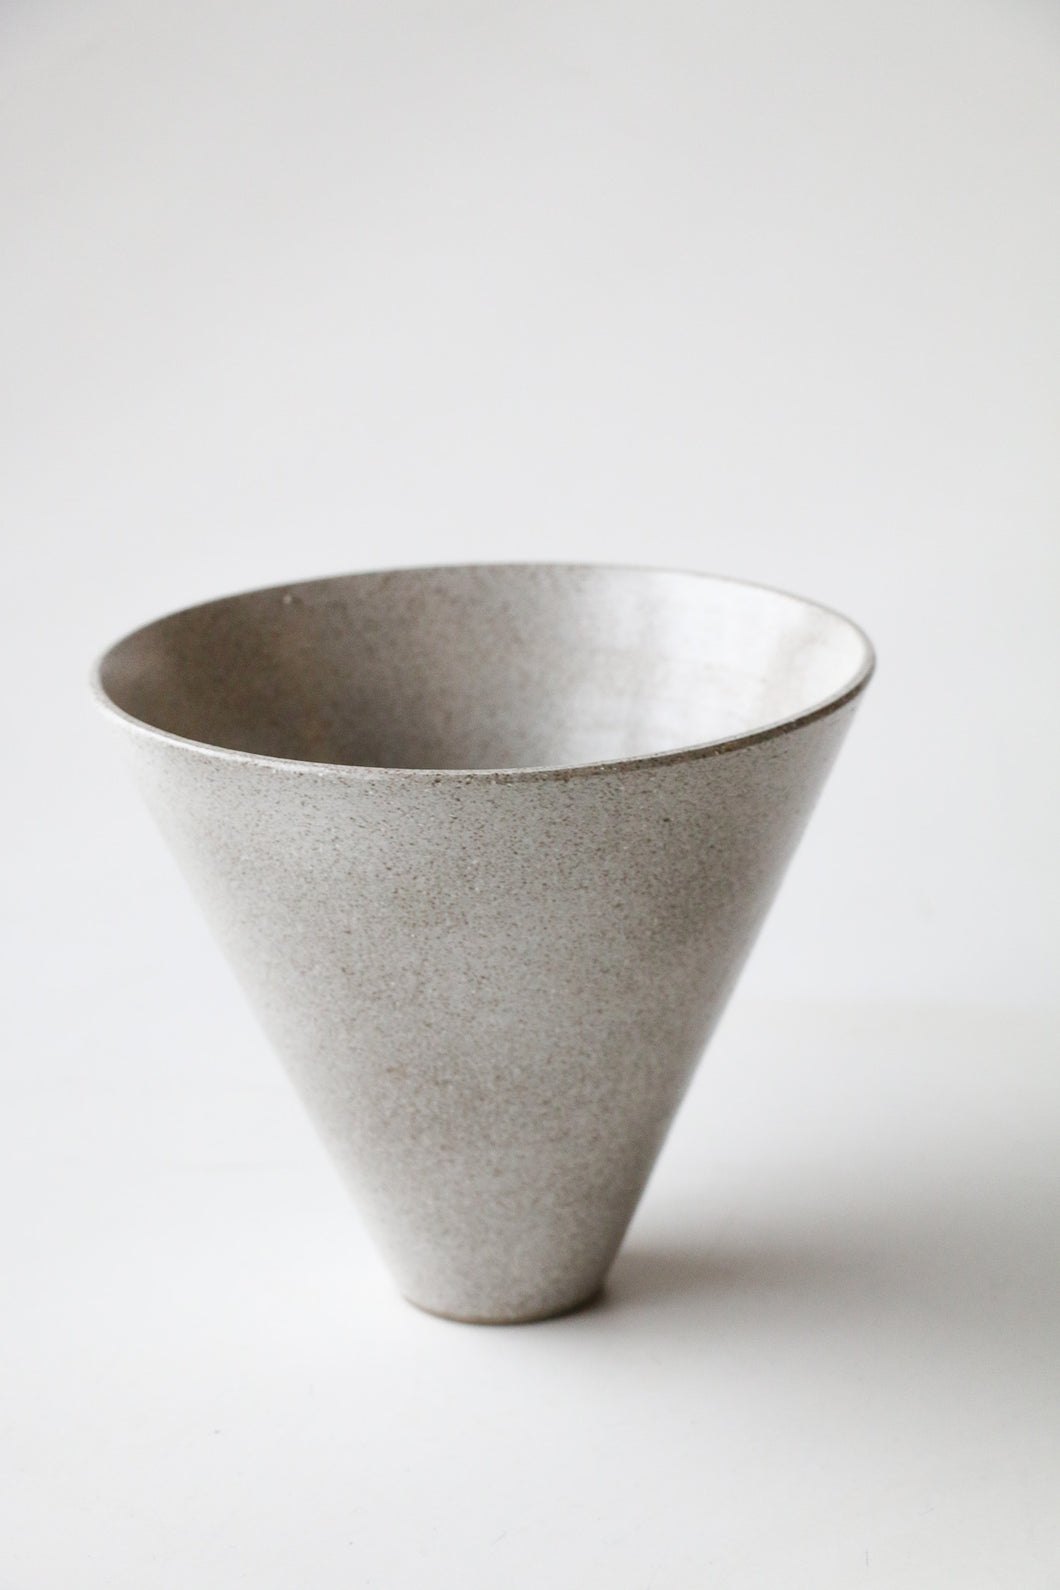 Ceramic Japanese Floral Vase